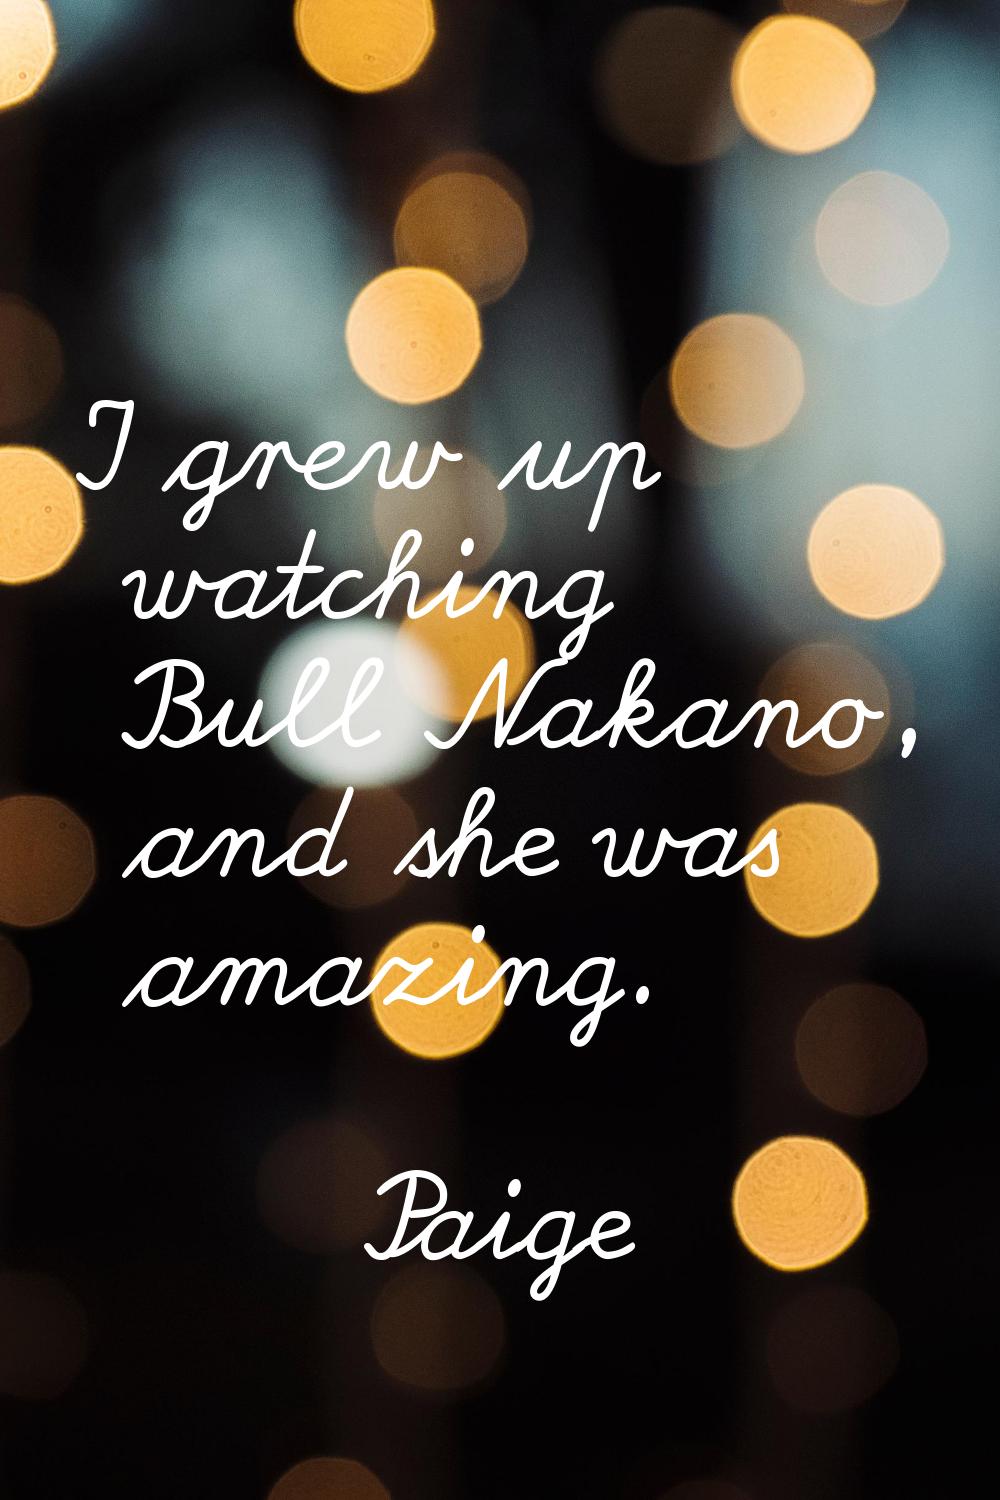 I grew up watching Bull Nakano, and she was amazing.